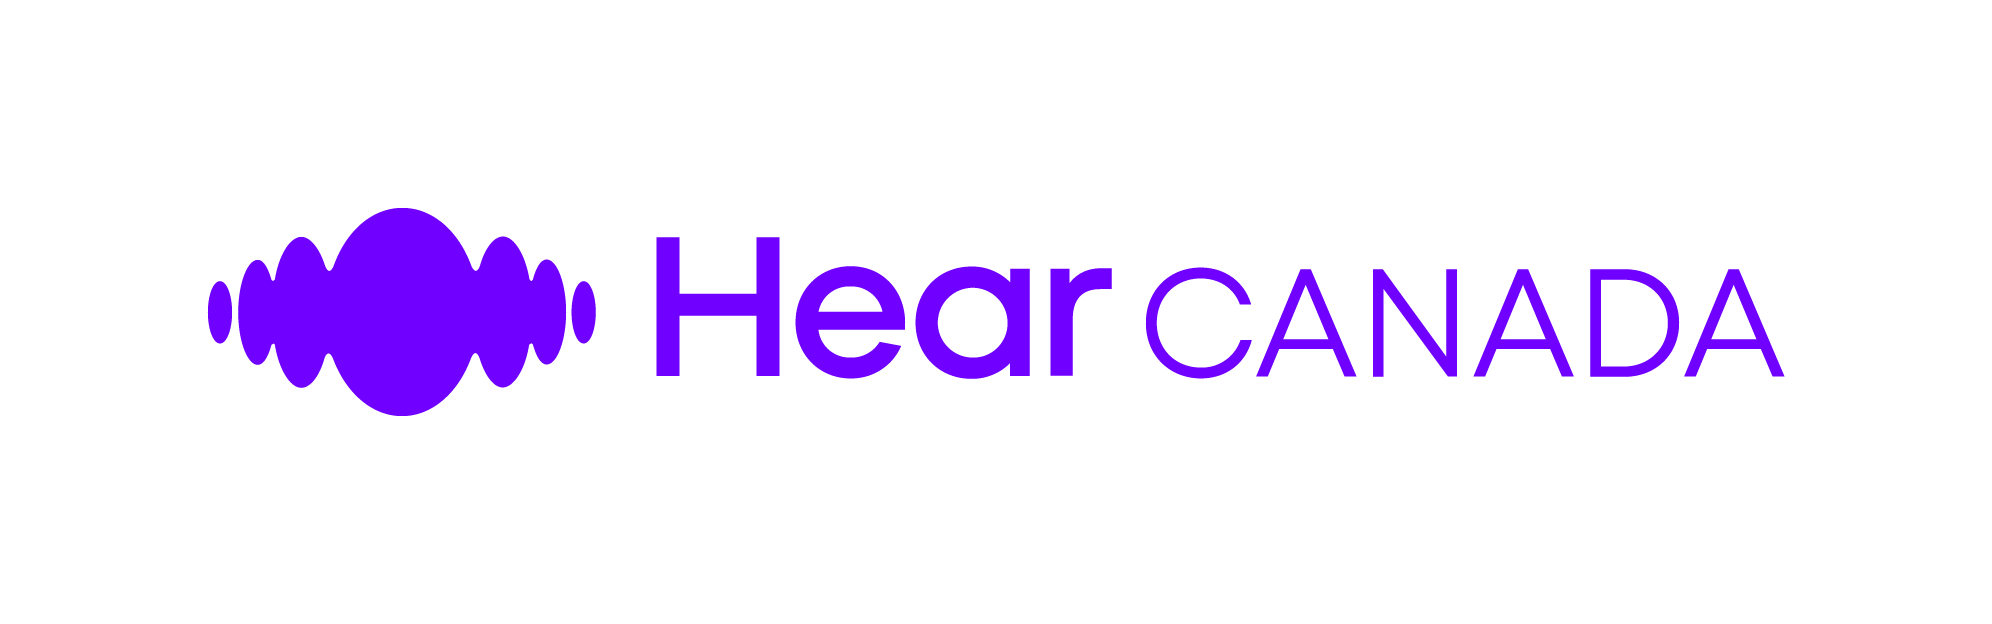 Hear Canada-logo-Horizontal-RGB.jpeg